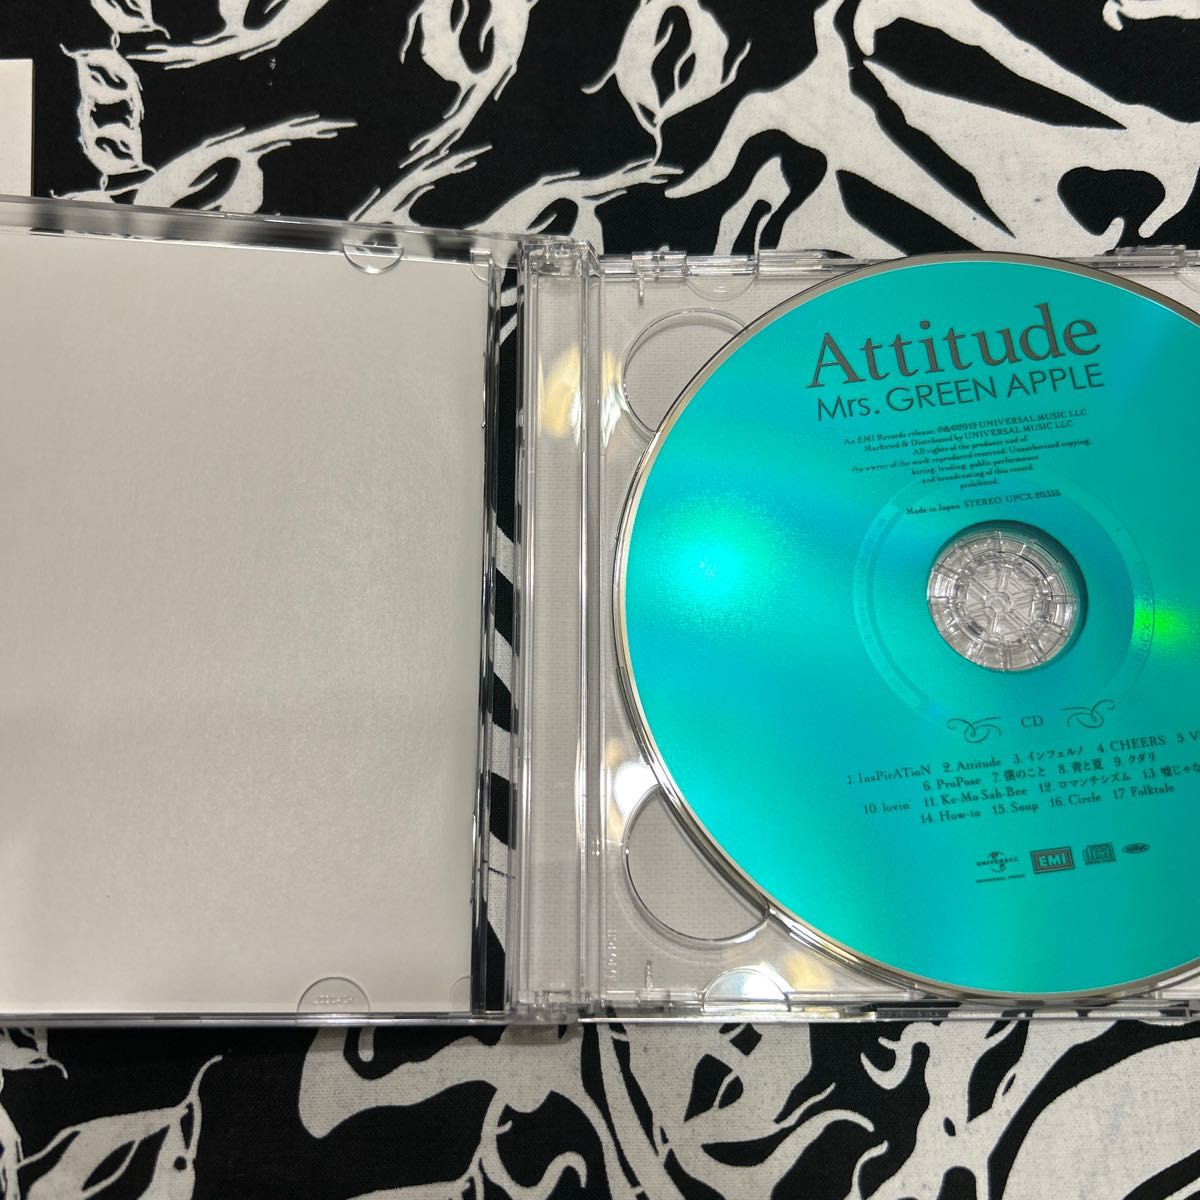 Attitude (初回限定盤) (DVD付)Mrs.green apple